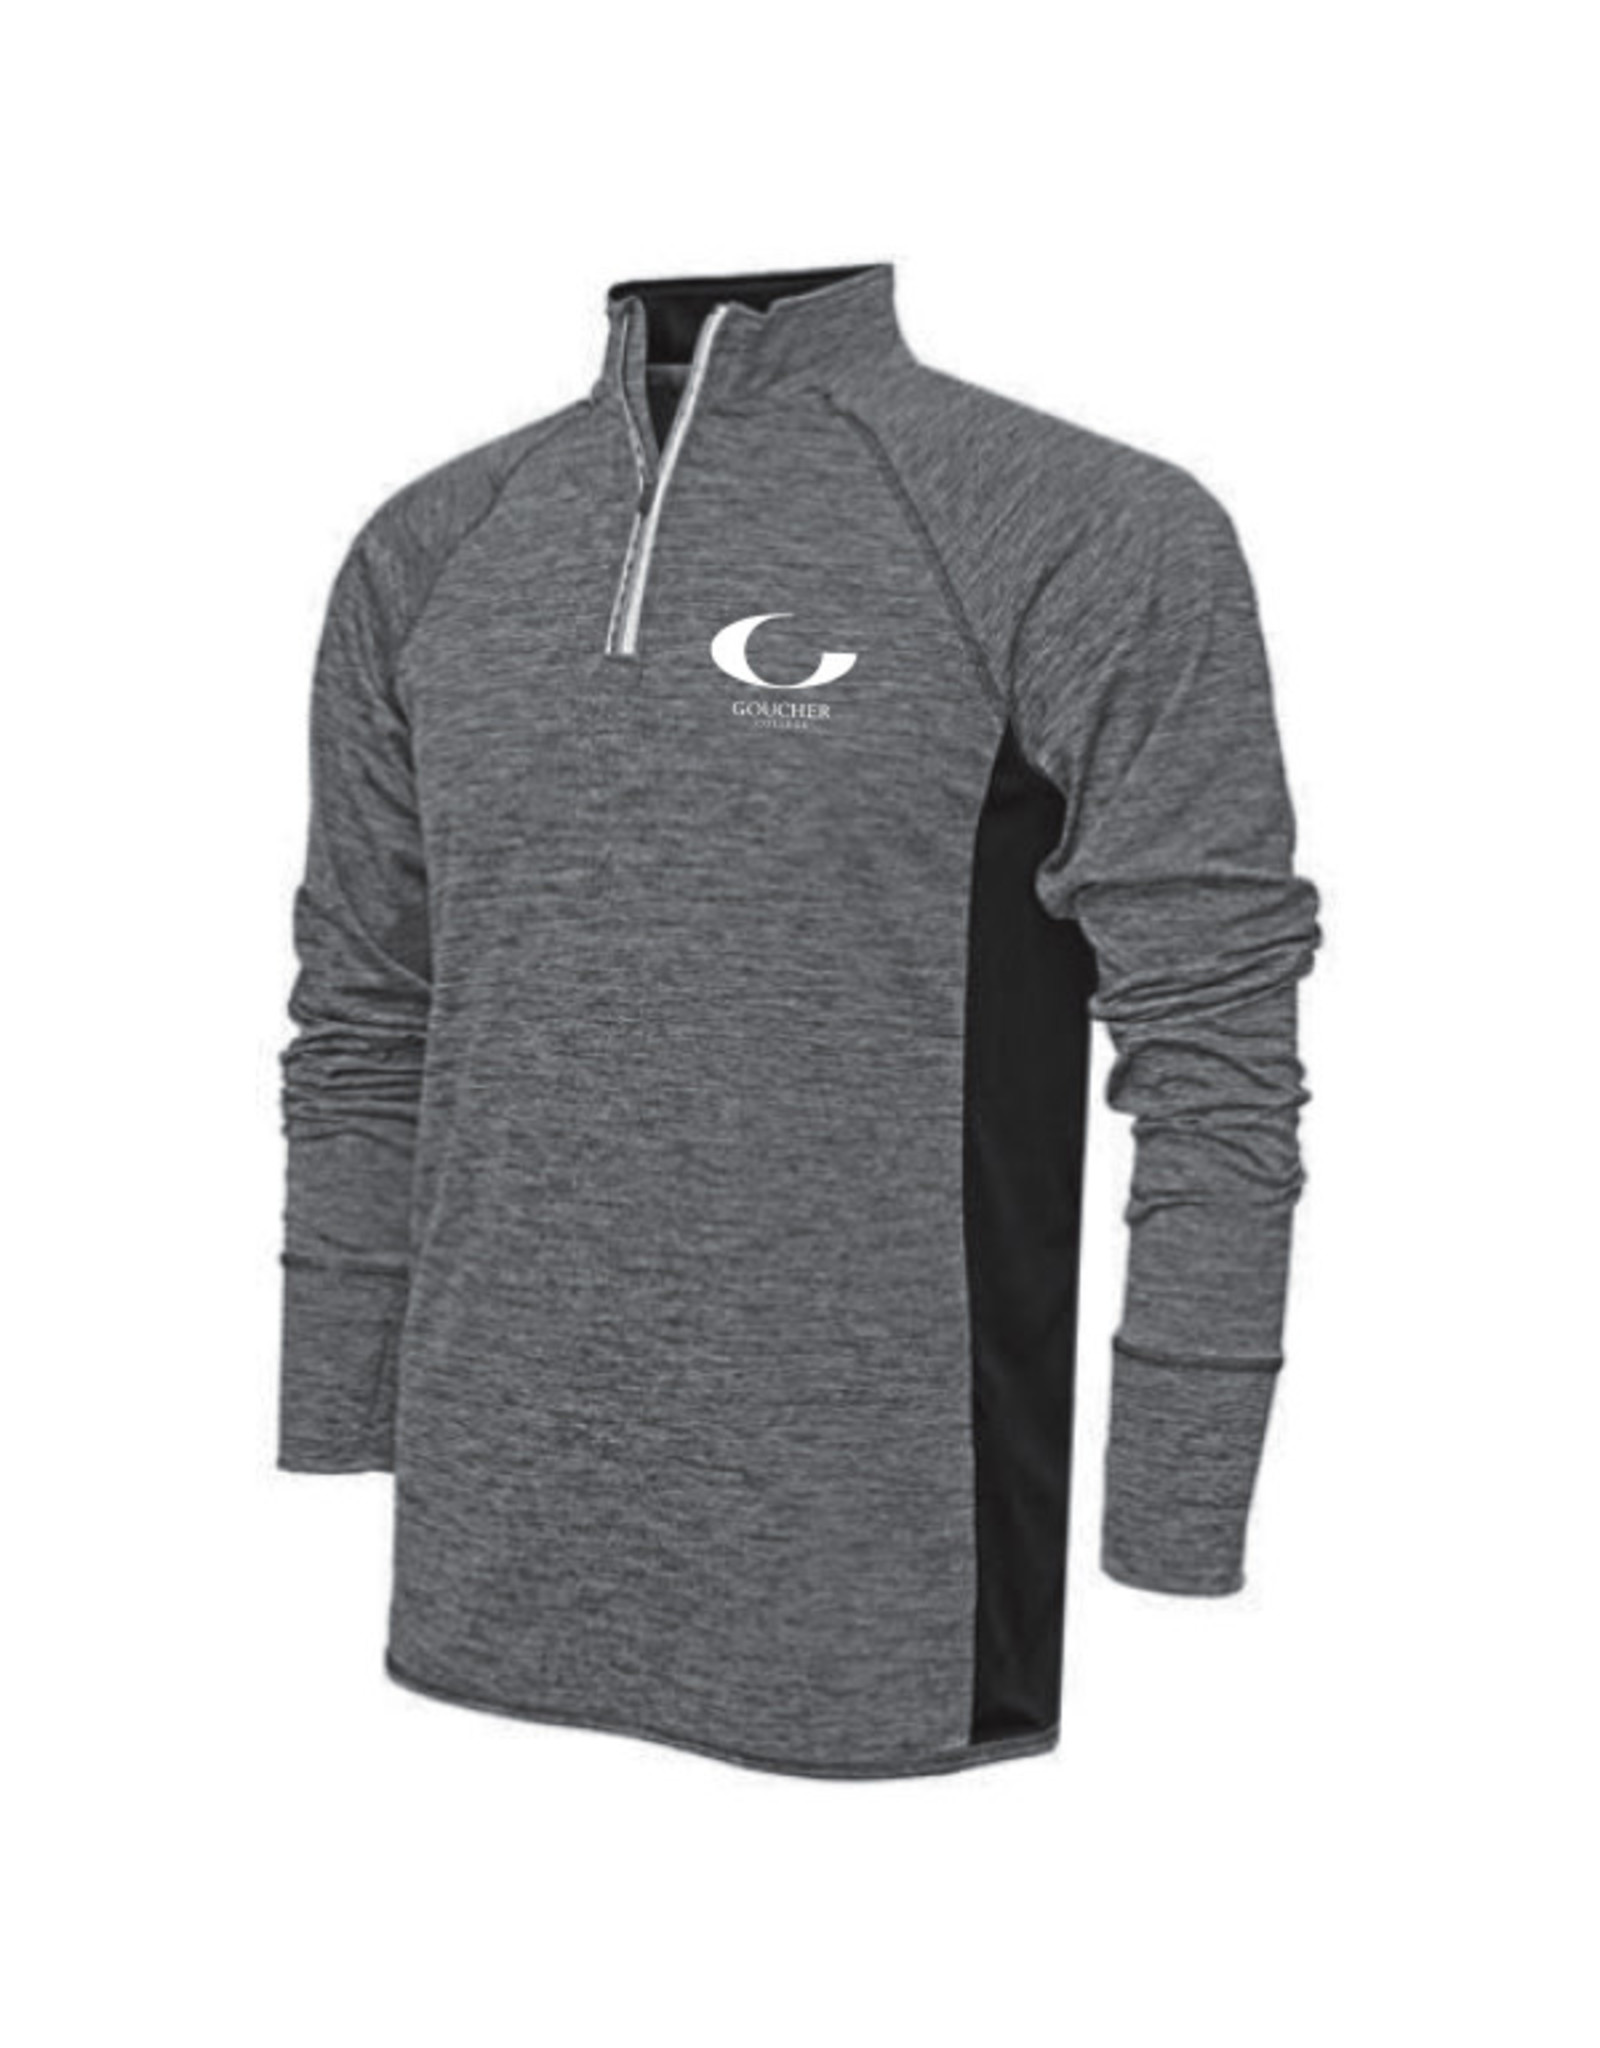 BAW Athletic Wear F160 - Adult Dry-Tek Full Zip Sweatshirt $24.50 -  Sweatshirts, dry tek